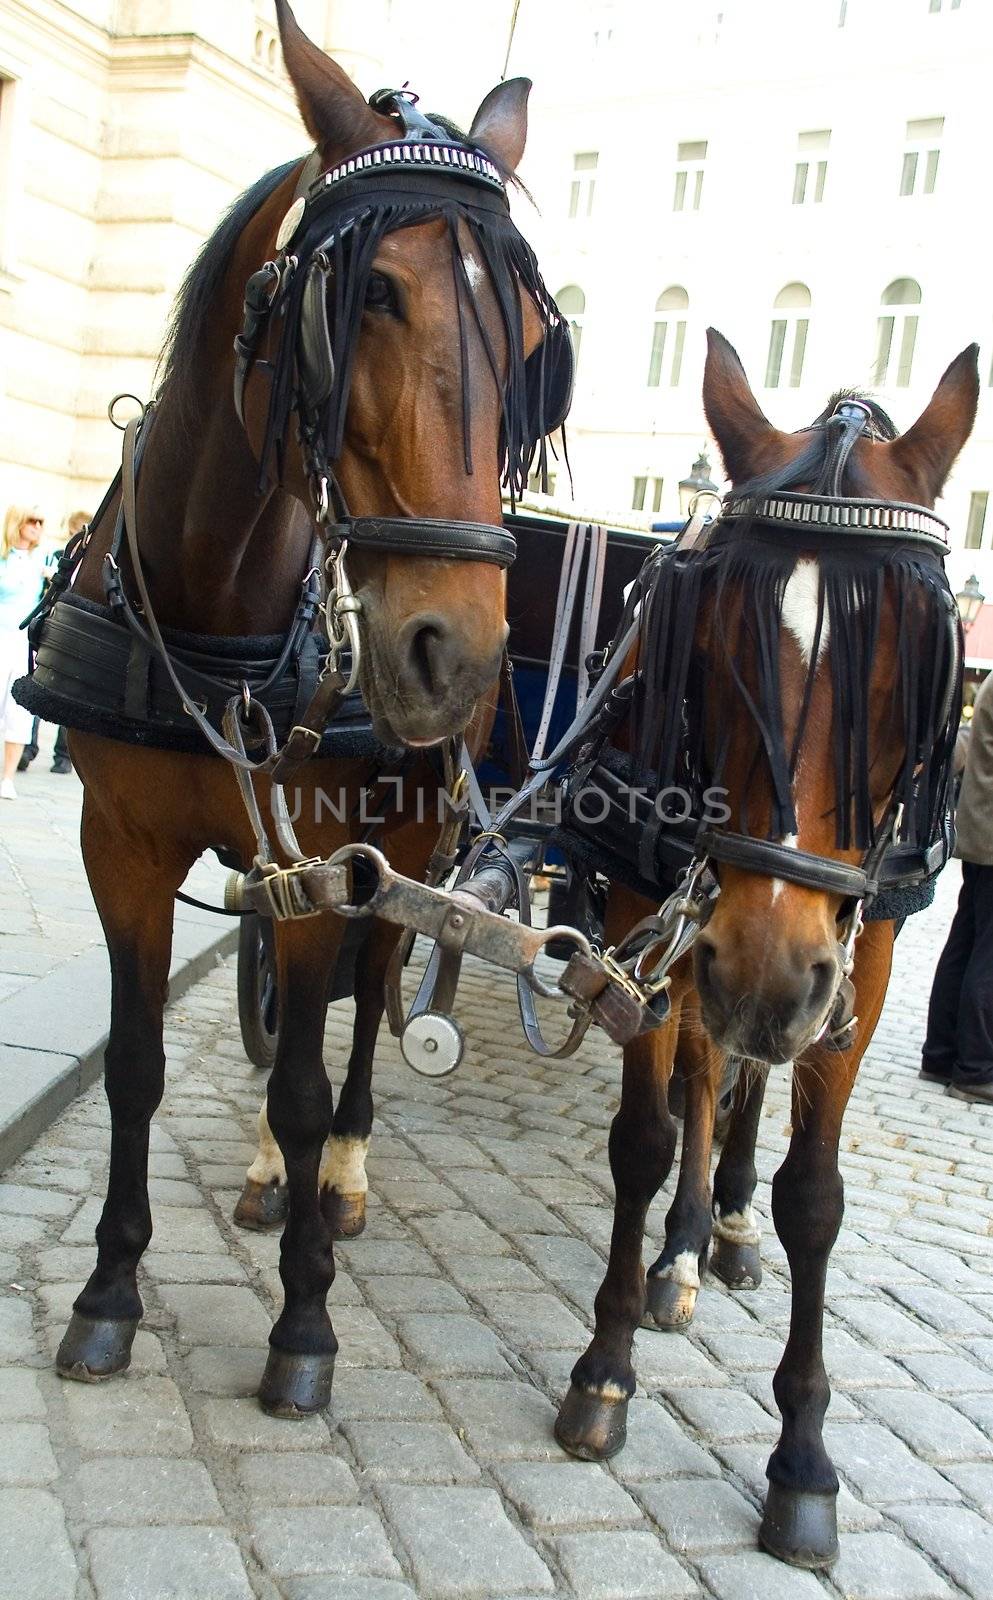 City horses by Vladimir